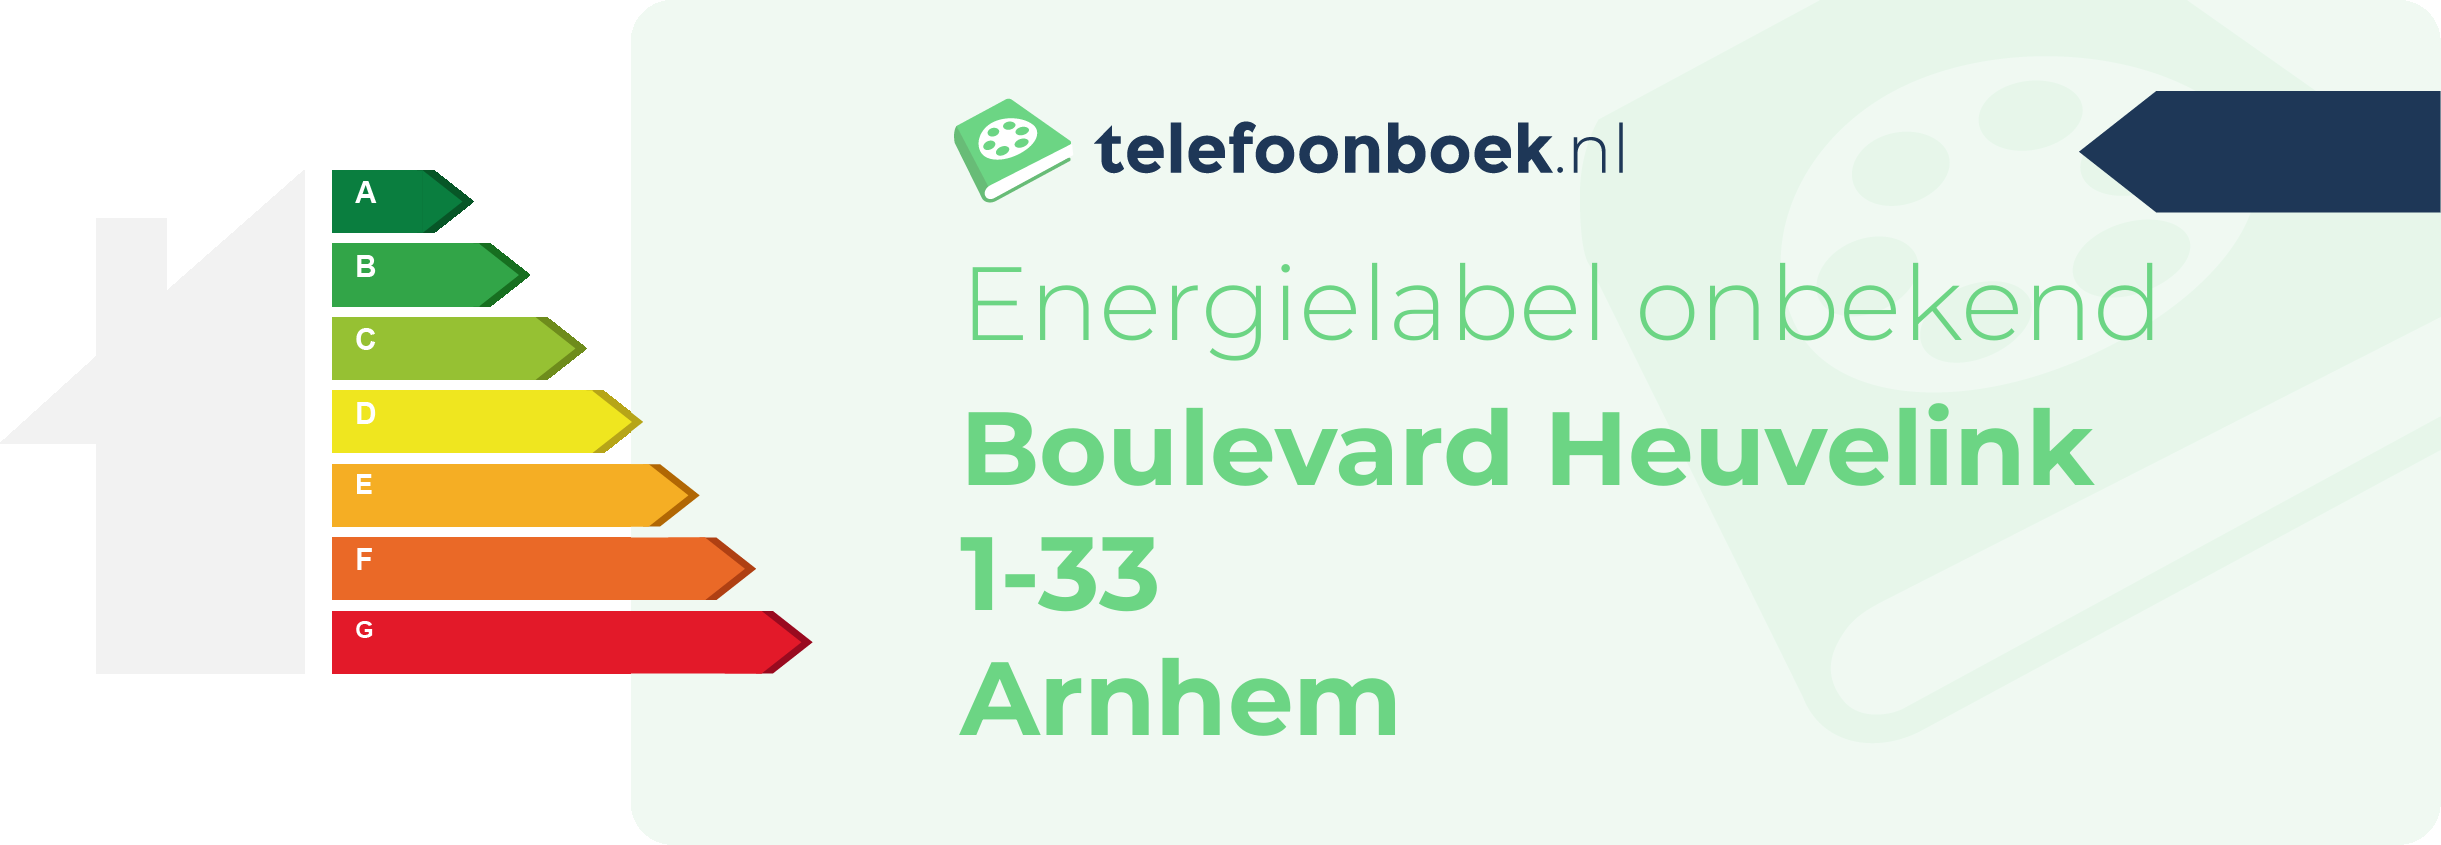 Energielabel Boulevard Heuvelink 1-33 Arnhem